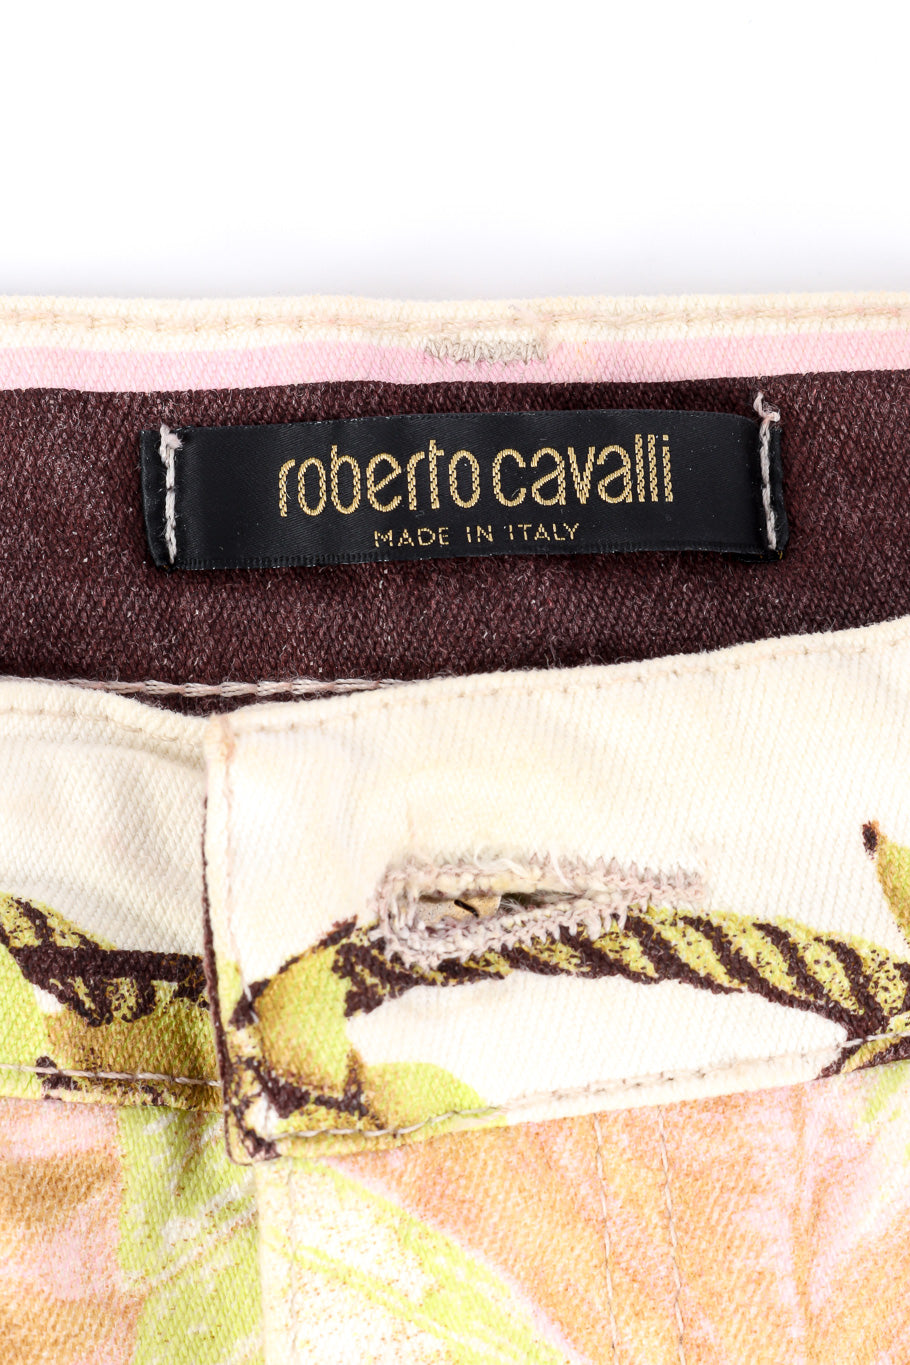 Palm print jeans by Roberto Cavalli label @recessla